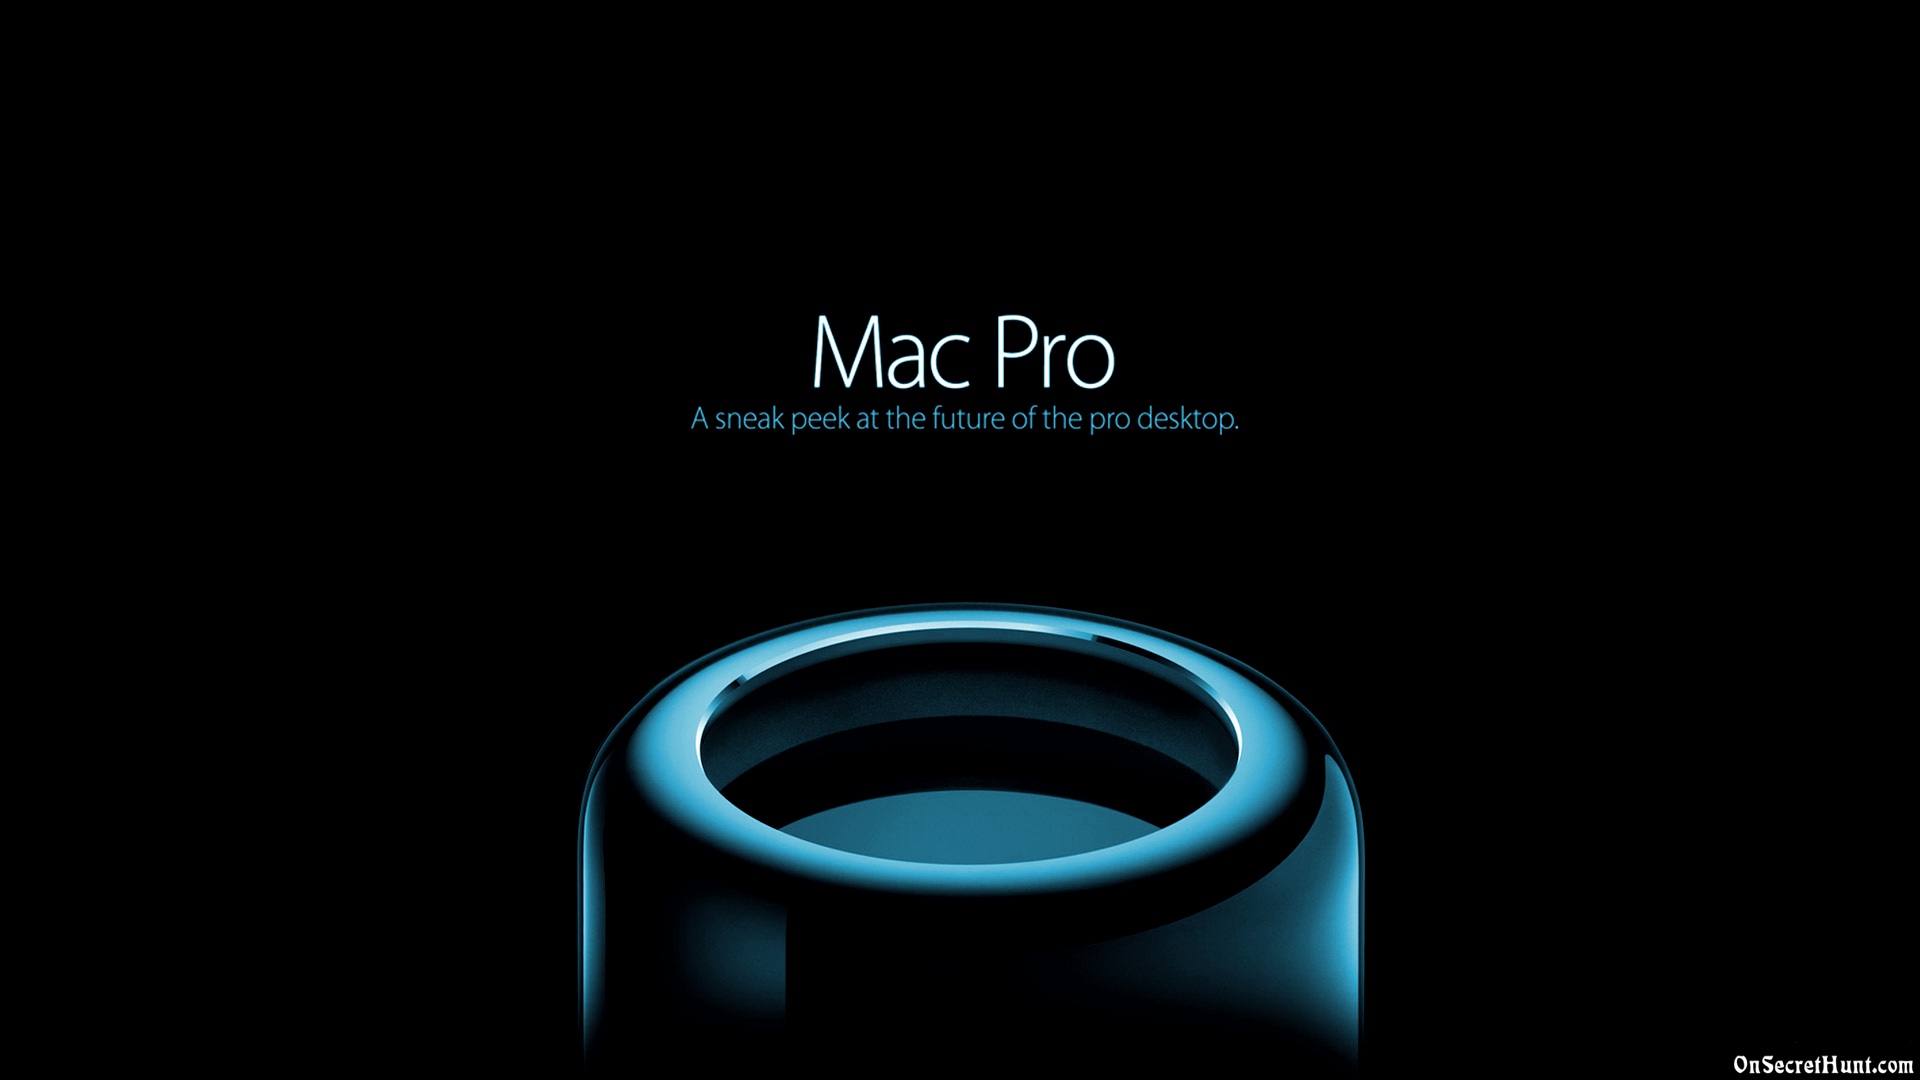 New Mac Pro 2013, 1920x1080 HD Wallpaper and FREE Stock Photo